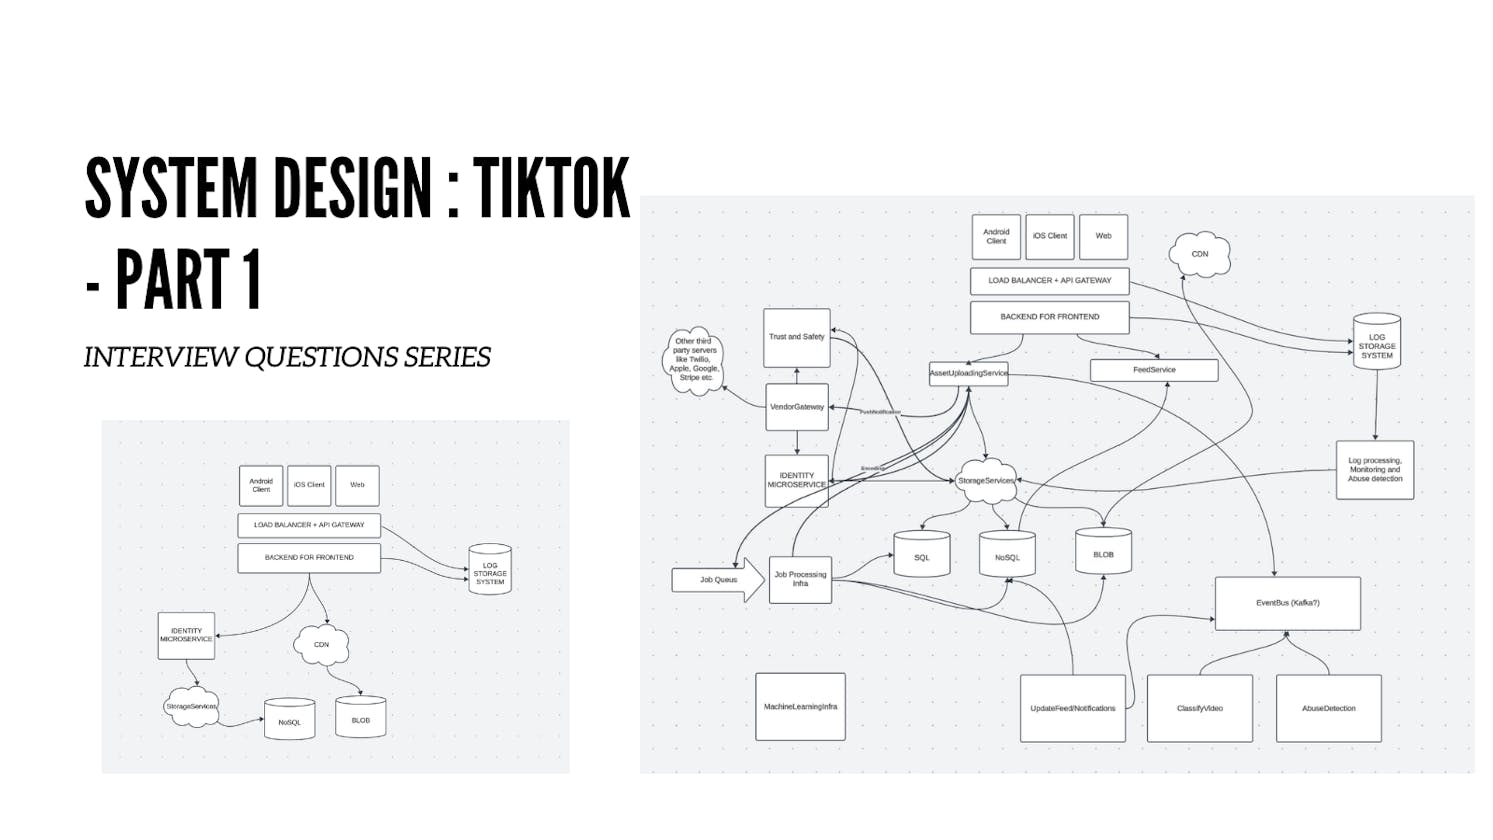 How to design Tiktok: System design interview